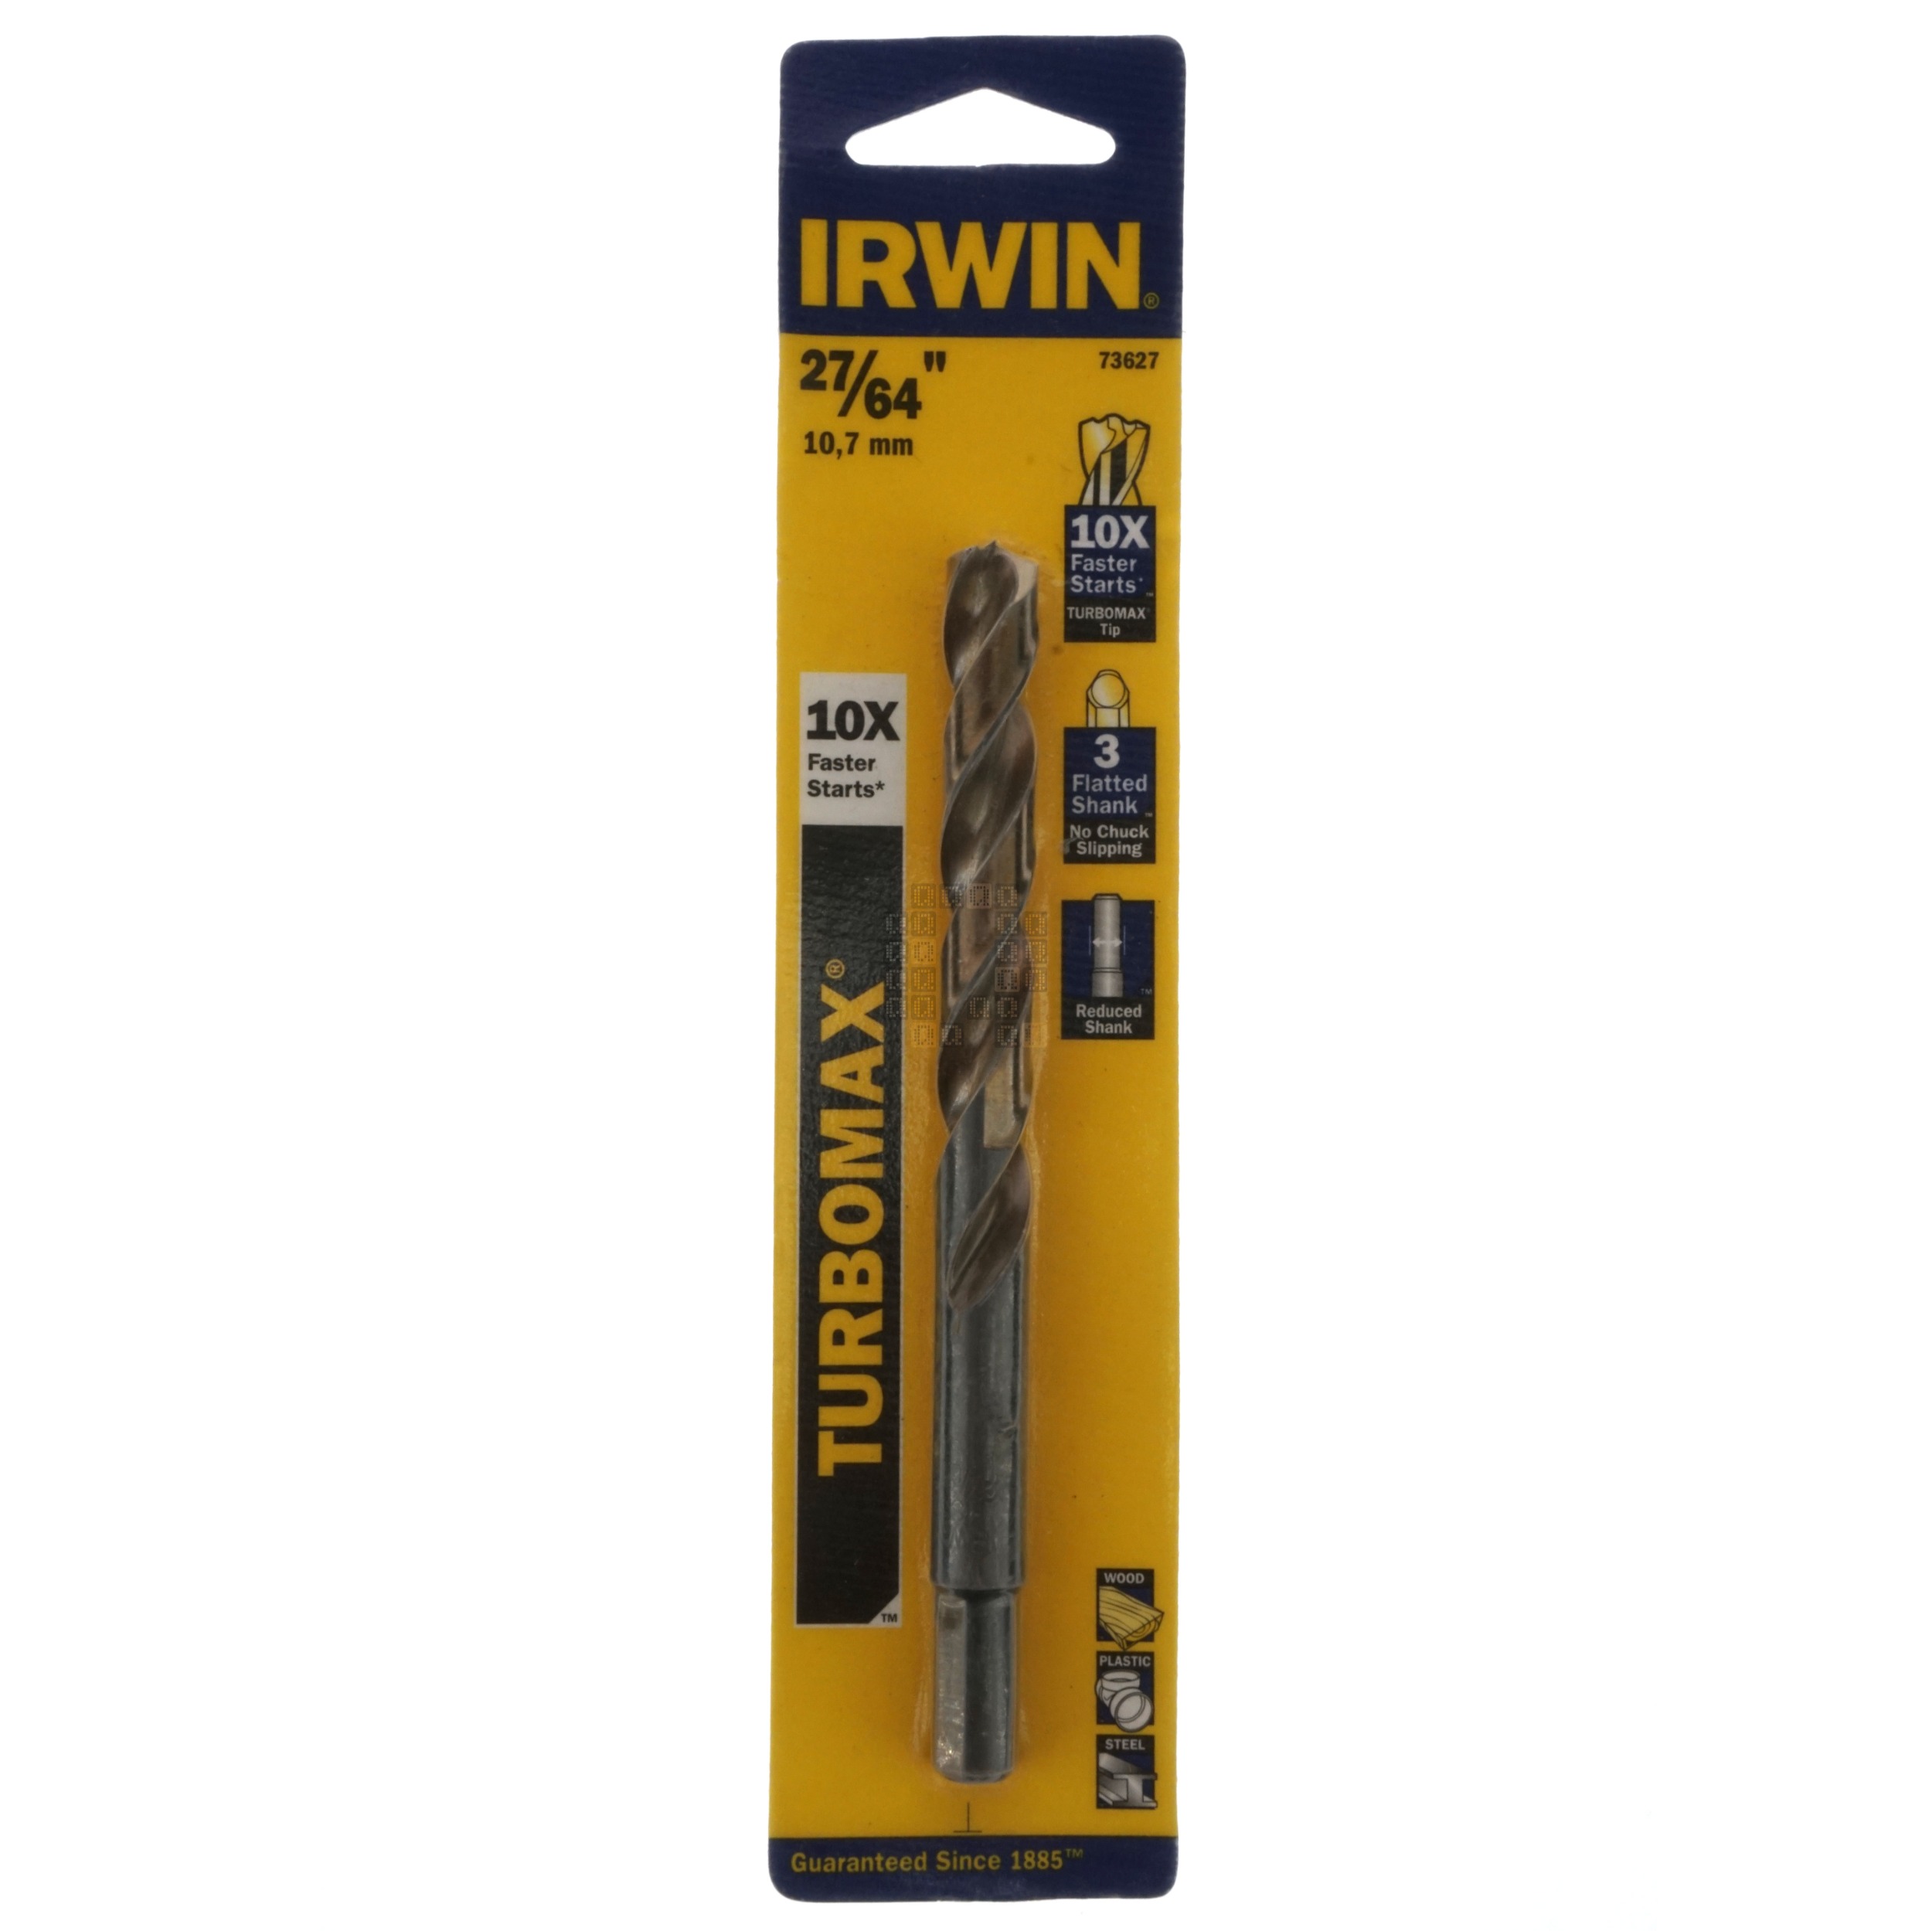 Irwin Industrial Tools 73627 Turbomax 27/64" Reduced Flatted Shank Drill Bit